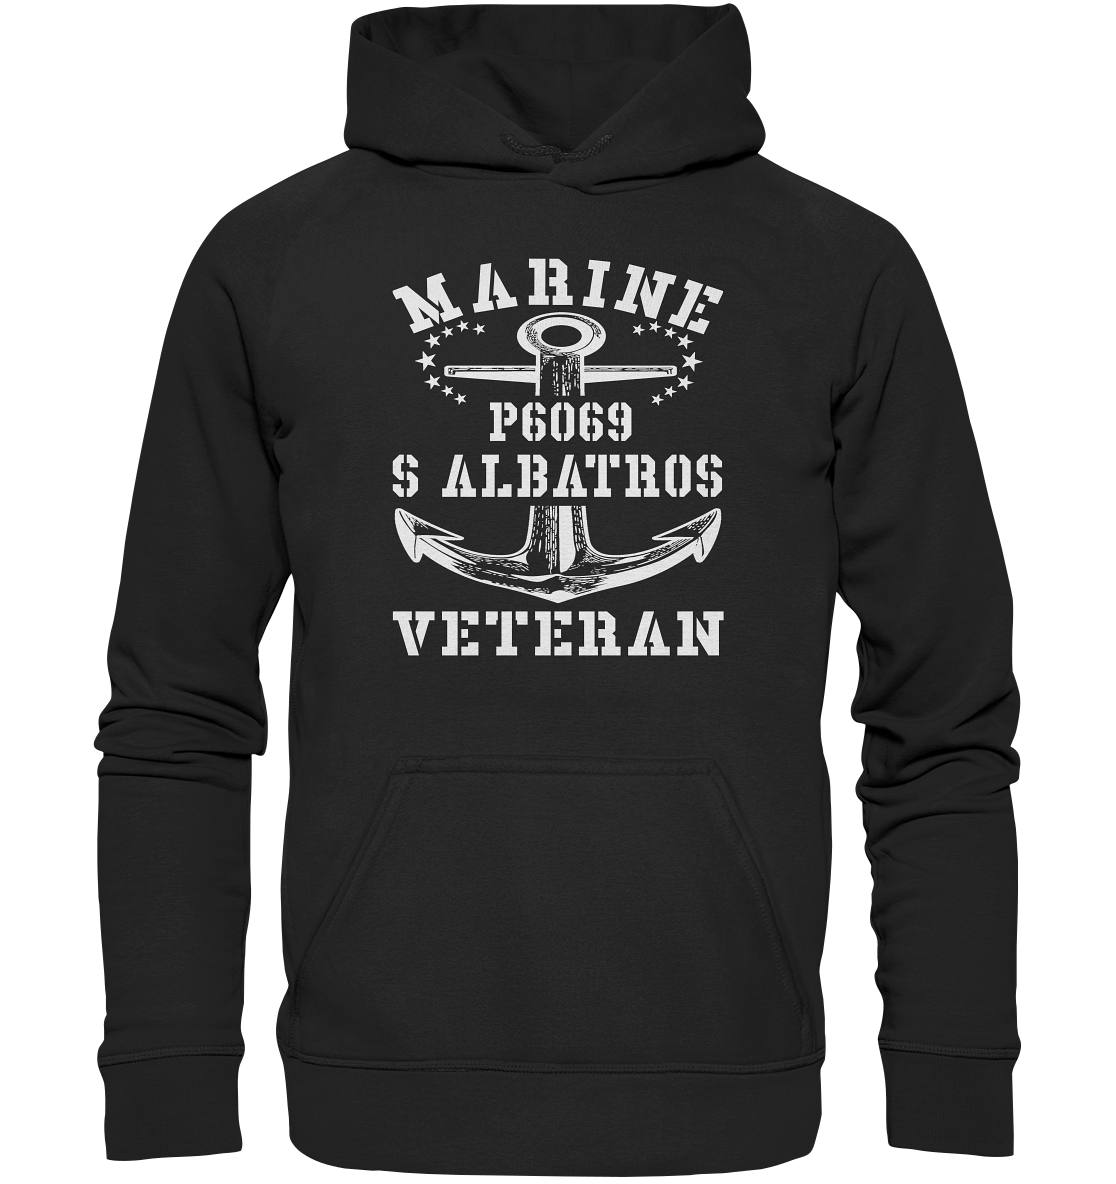 P6069 S ALBATROS Marine Veteran - Basic Unisex Hoodie